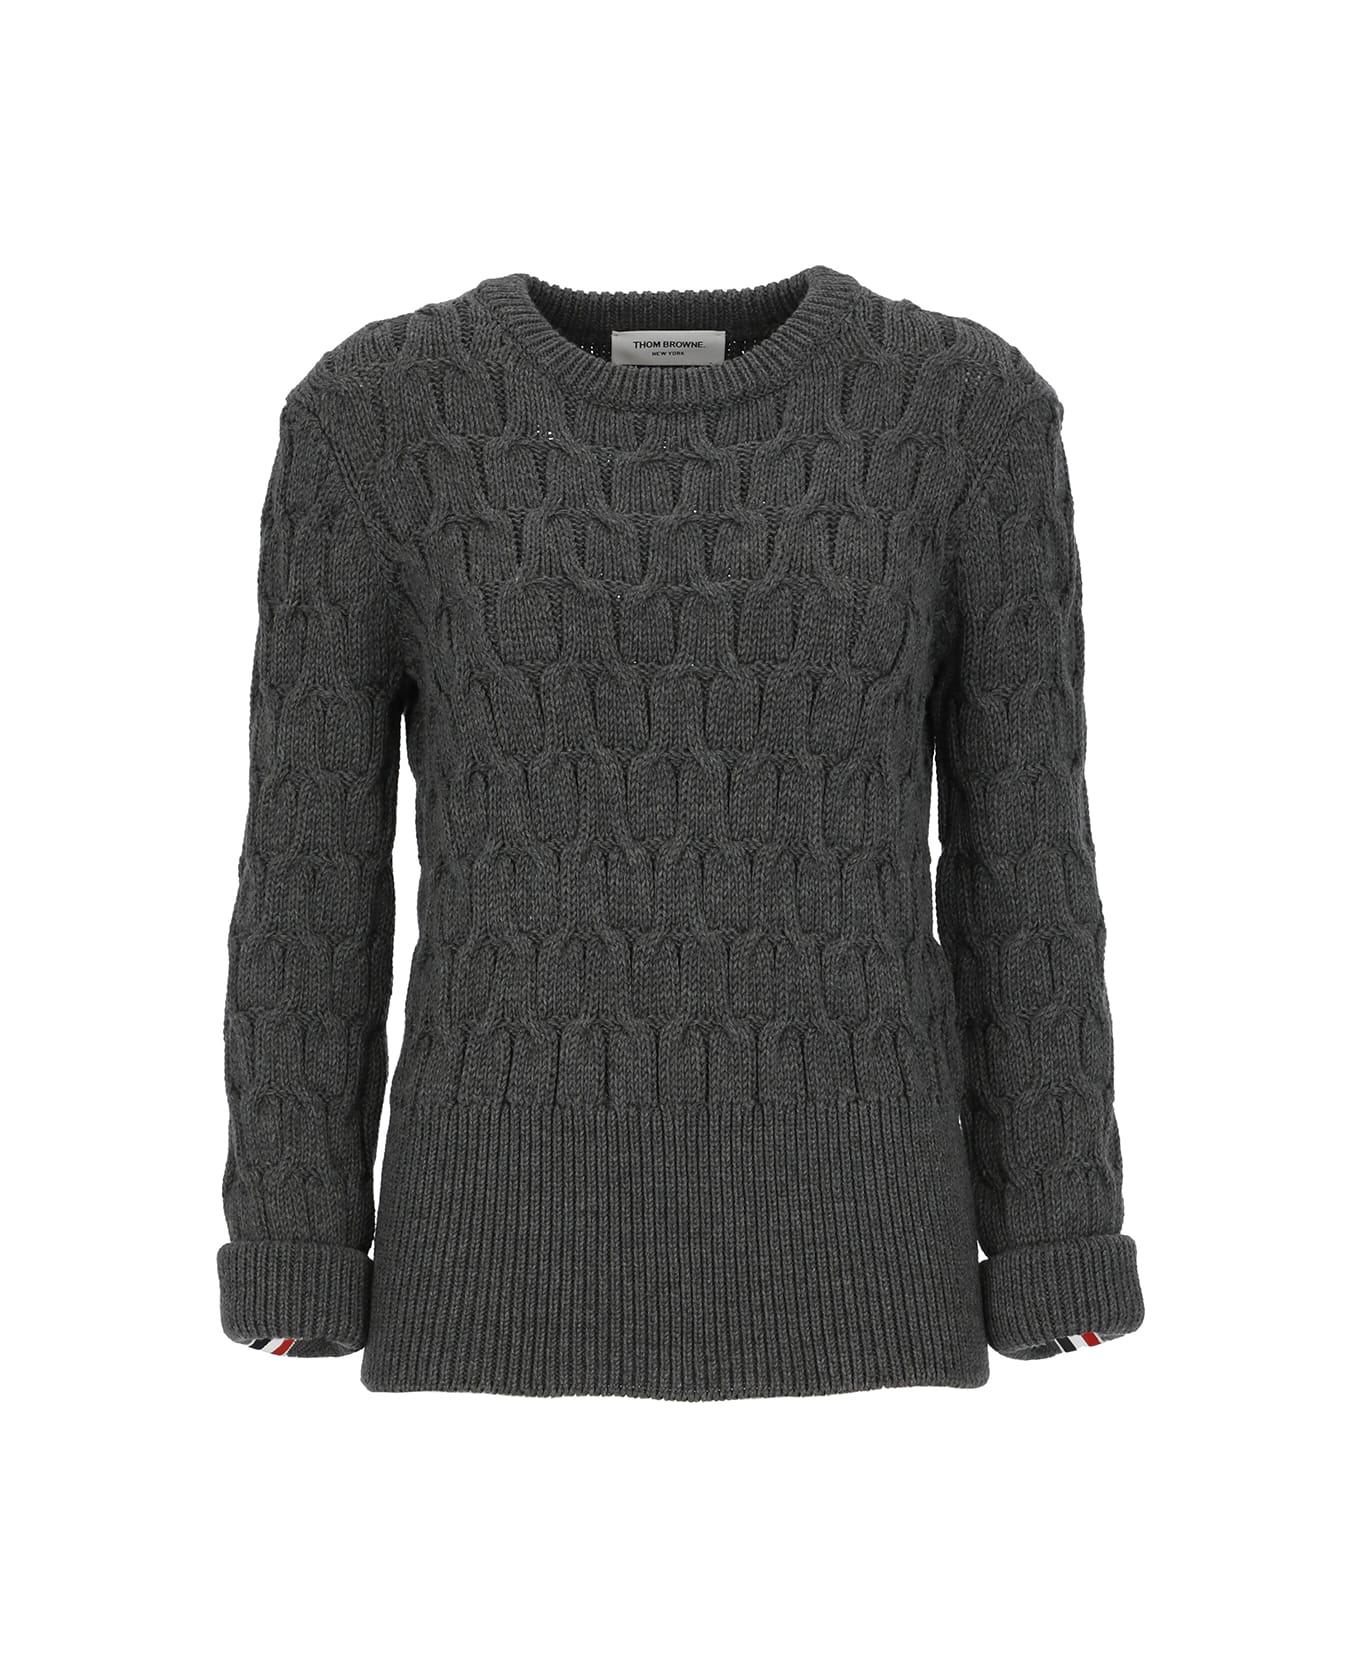 Thom Browne Sweater - Grey